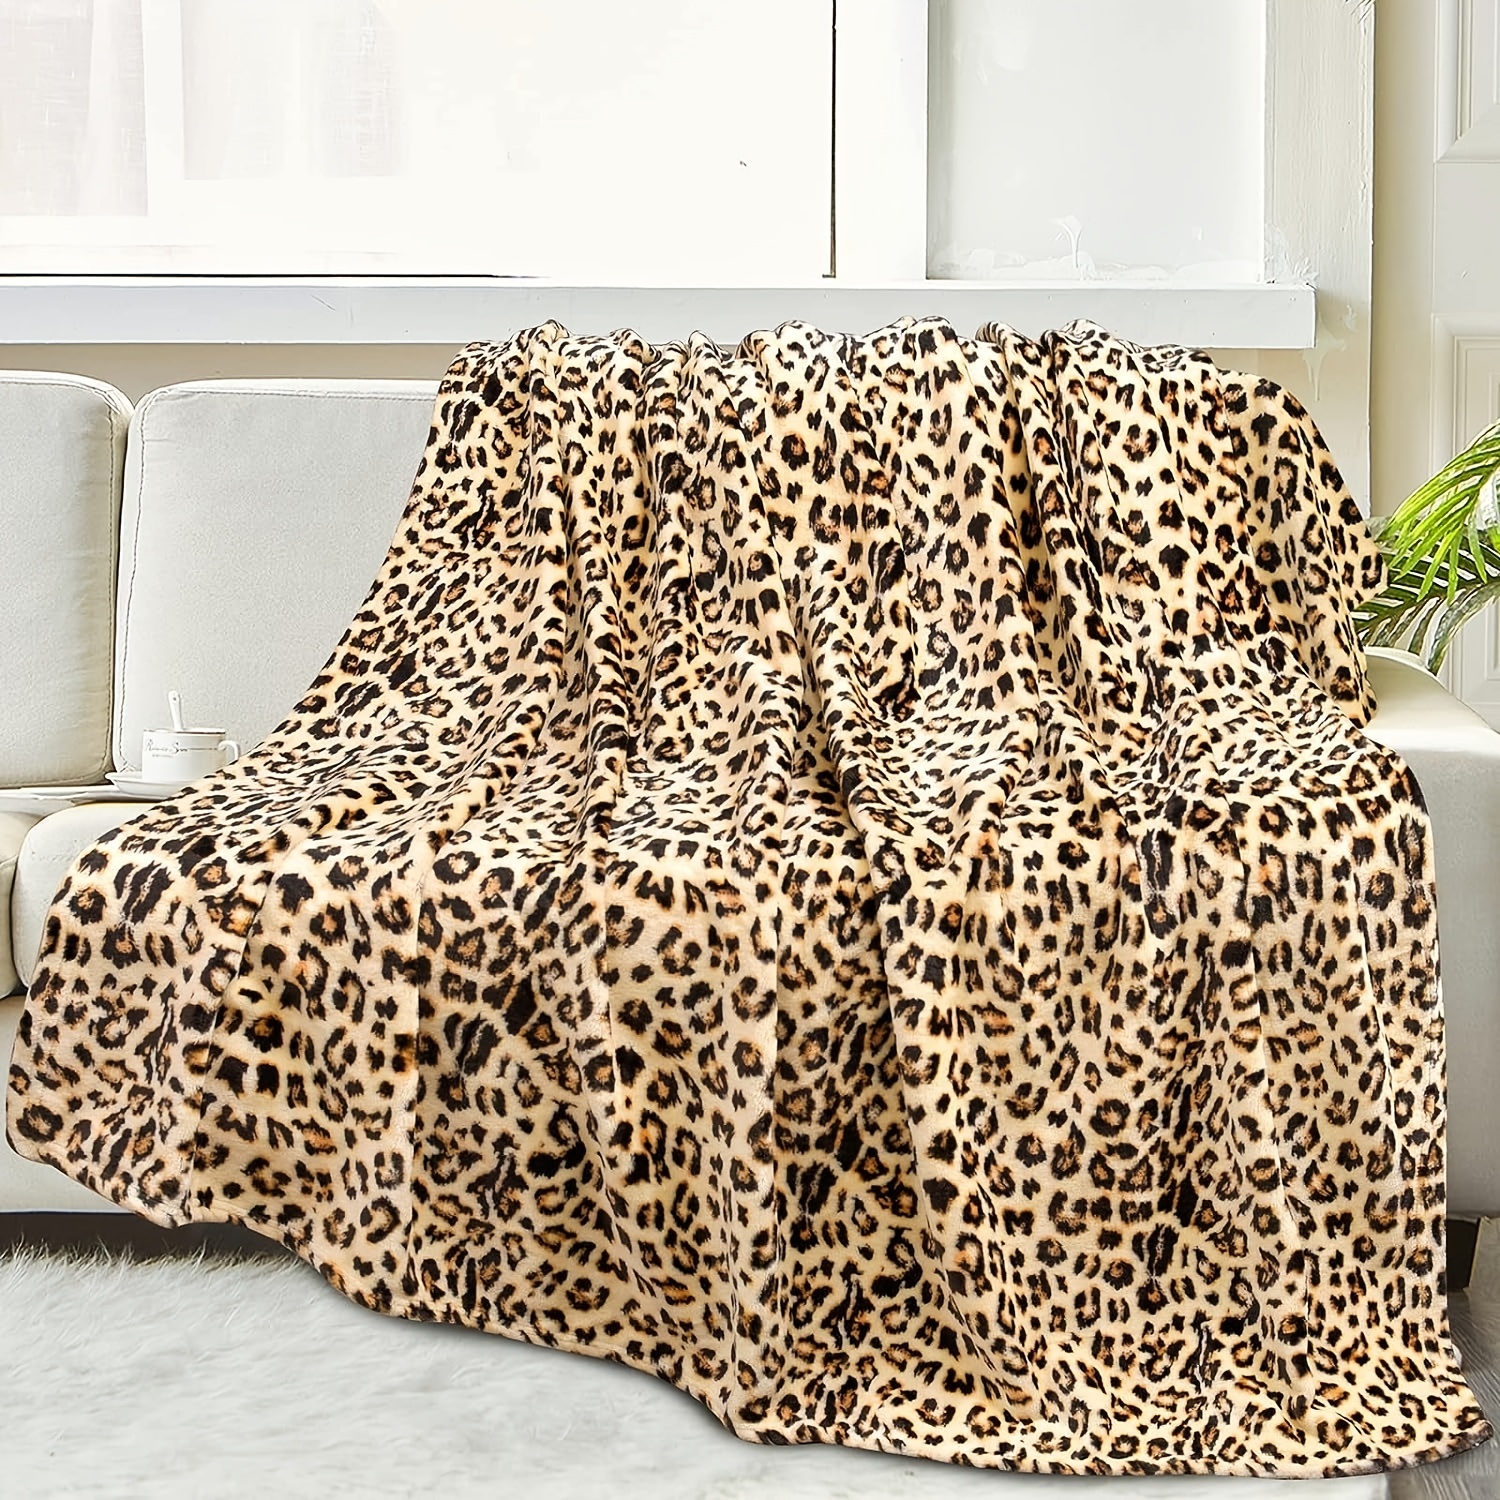 Leopard Cheetah Jaguar Feline Animal Print Soft Cozy Fuzzy Faux